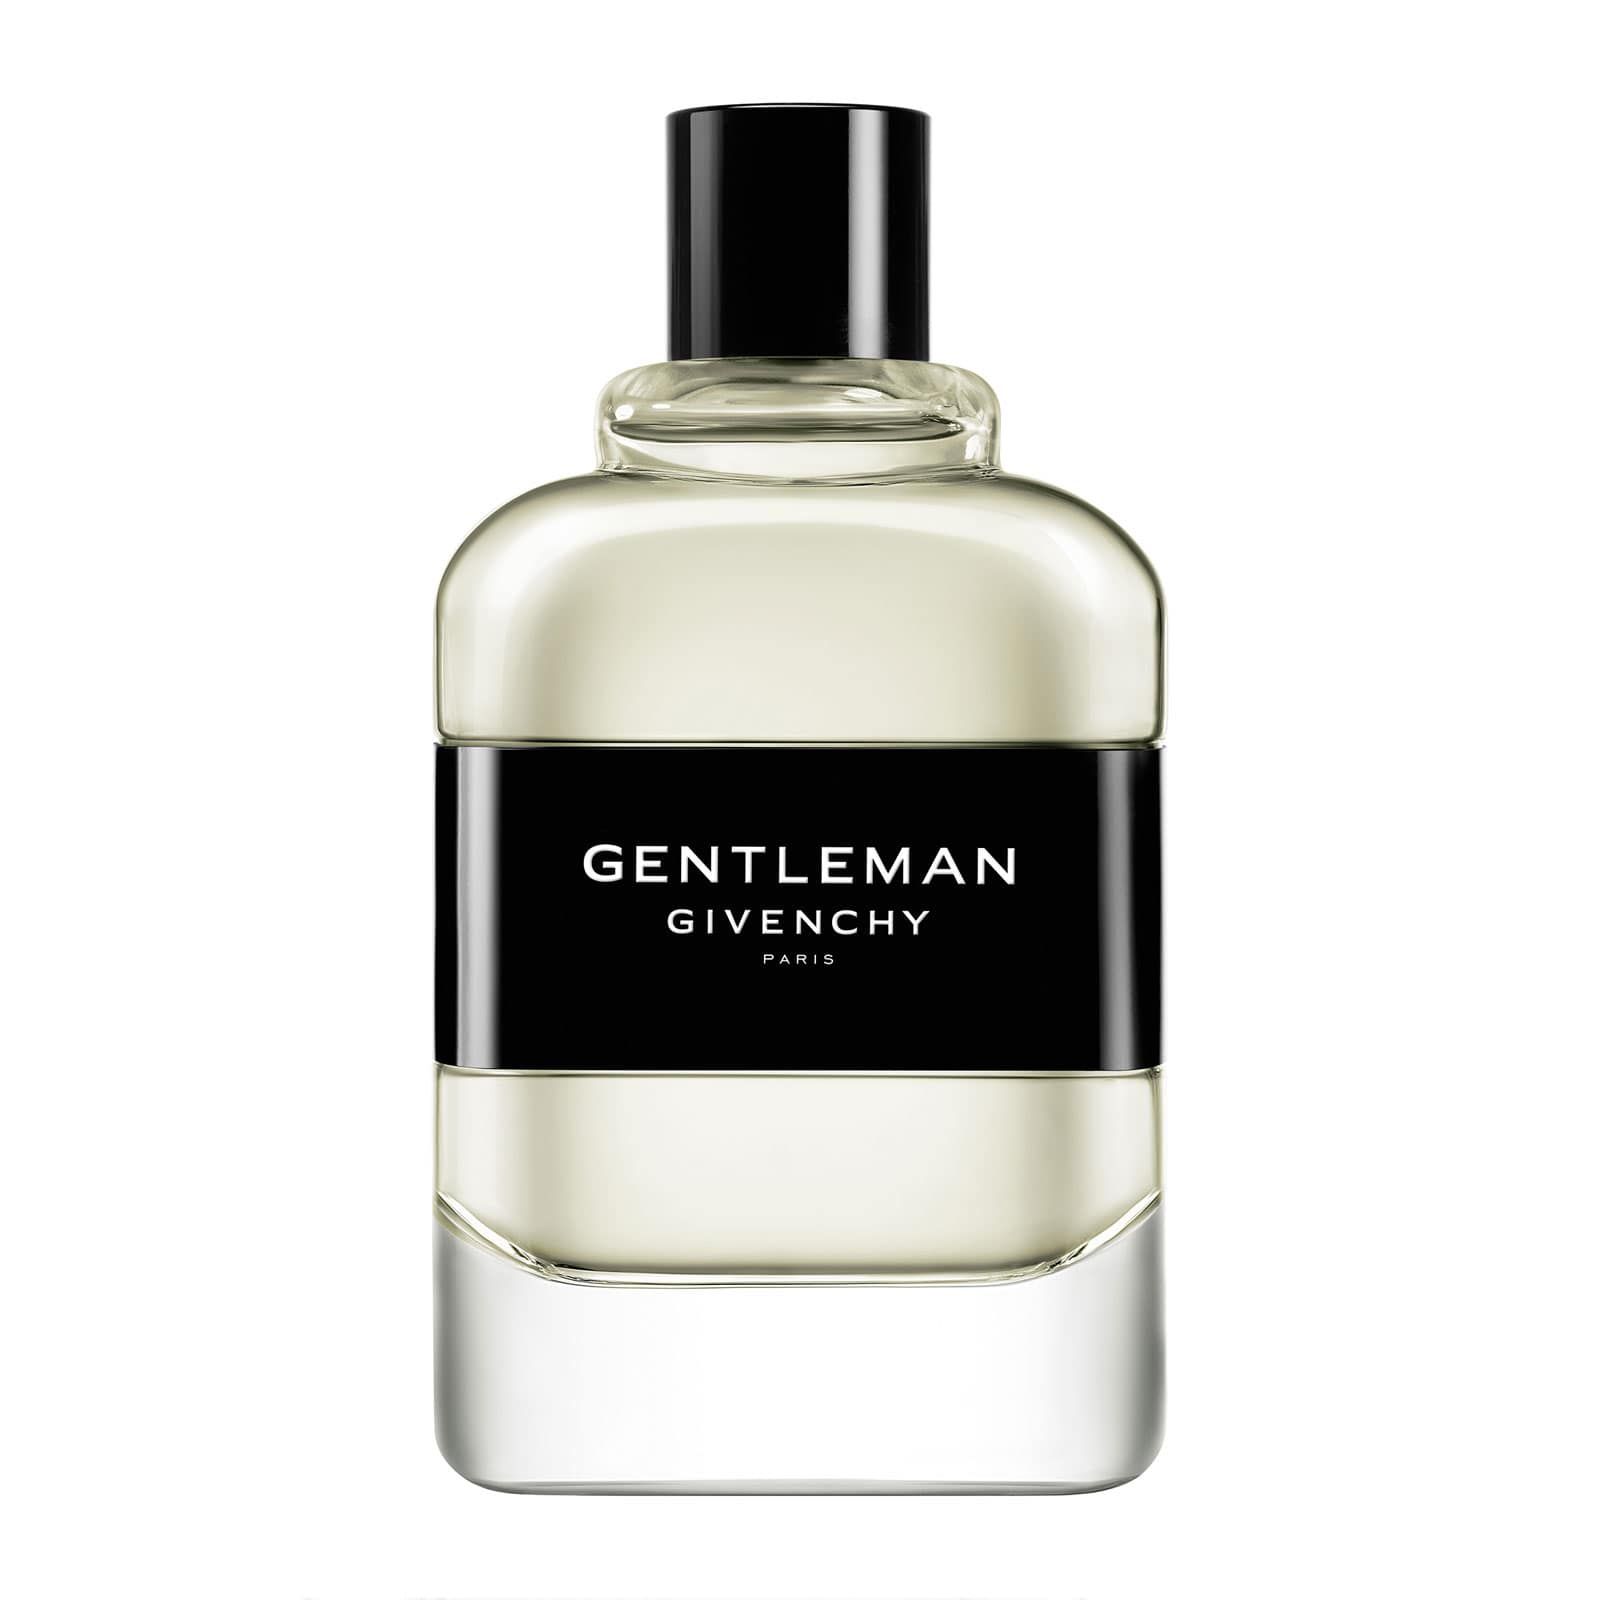 armani gentleman perfume